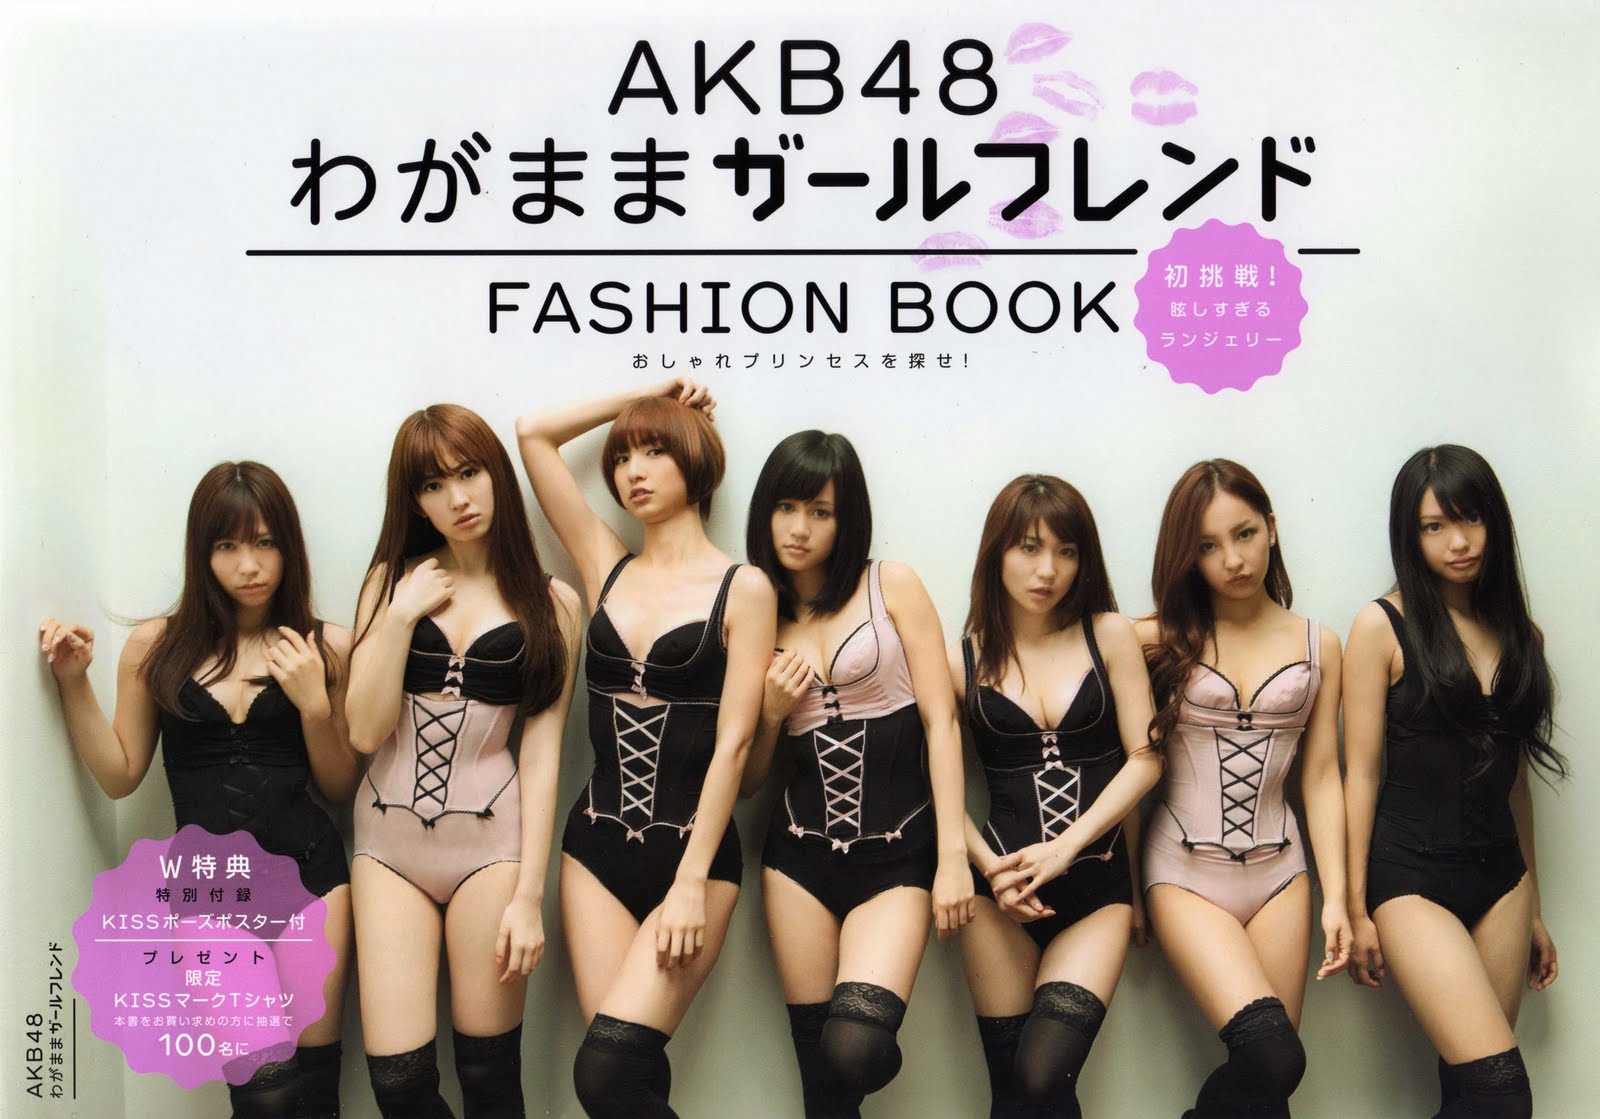 Comptons a l'infini ...  - Page 2 AKB48+Wallpaper+HD+9